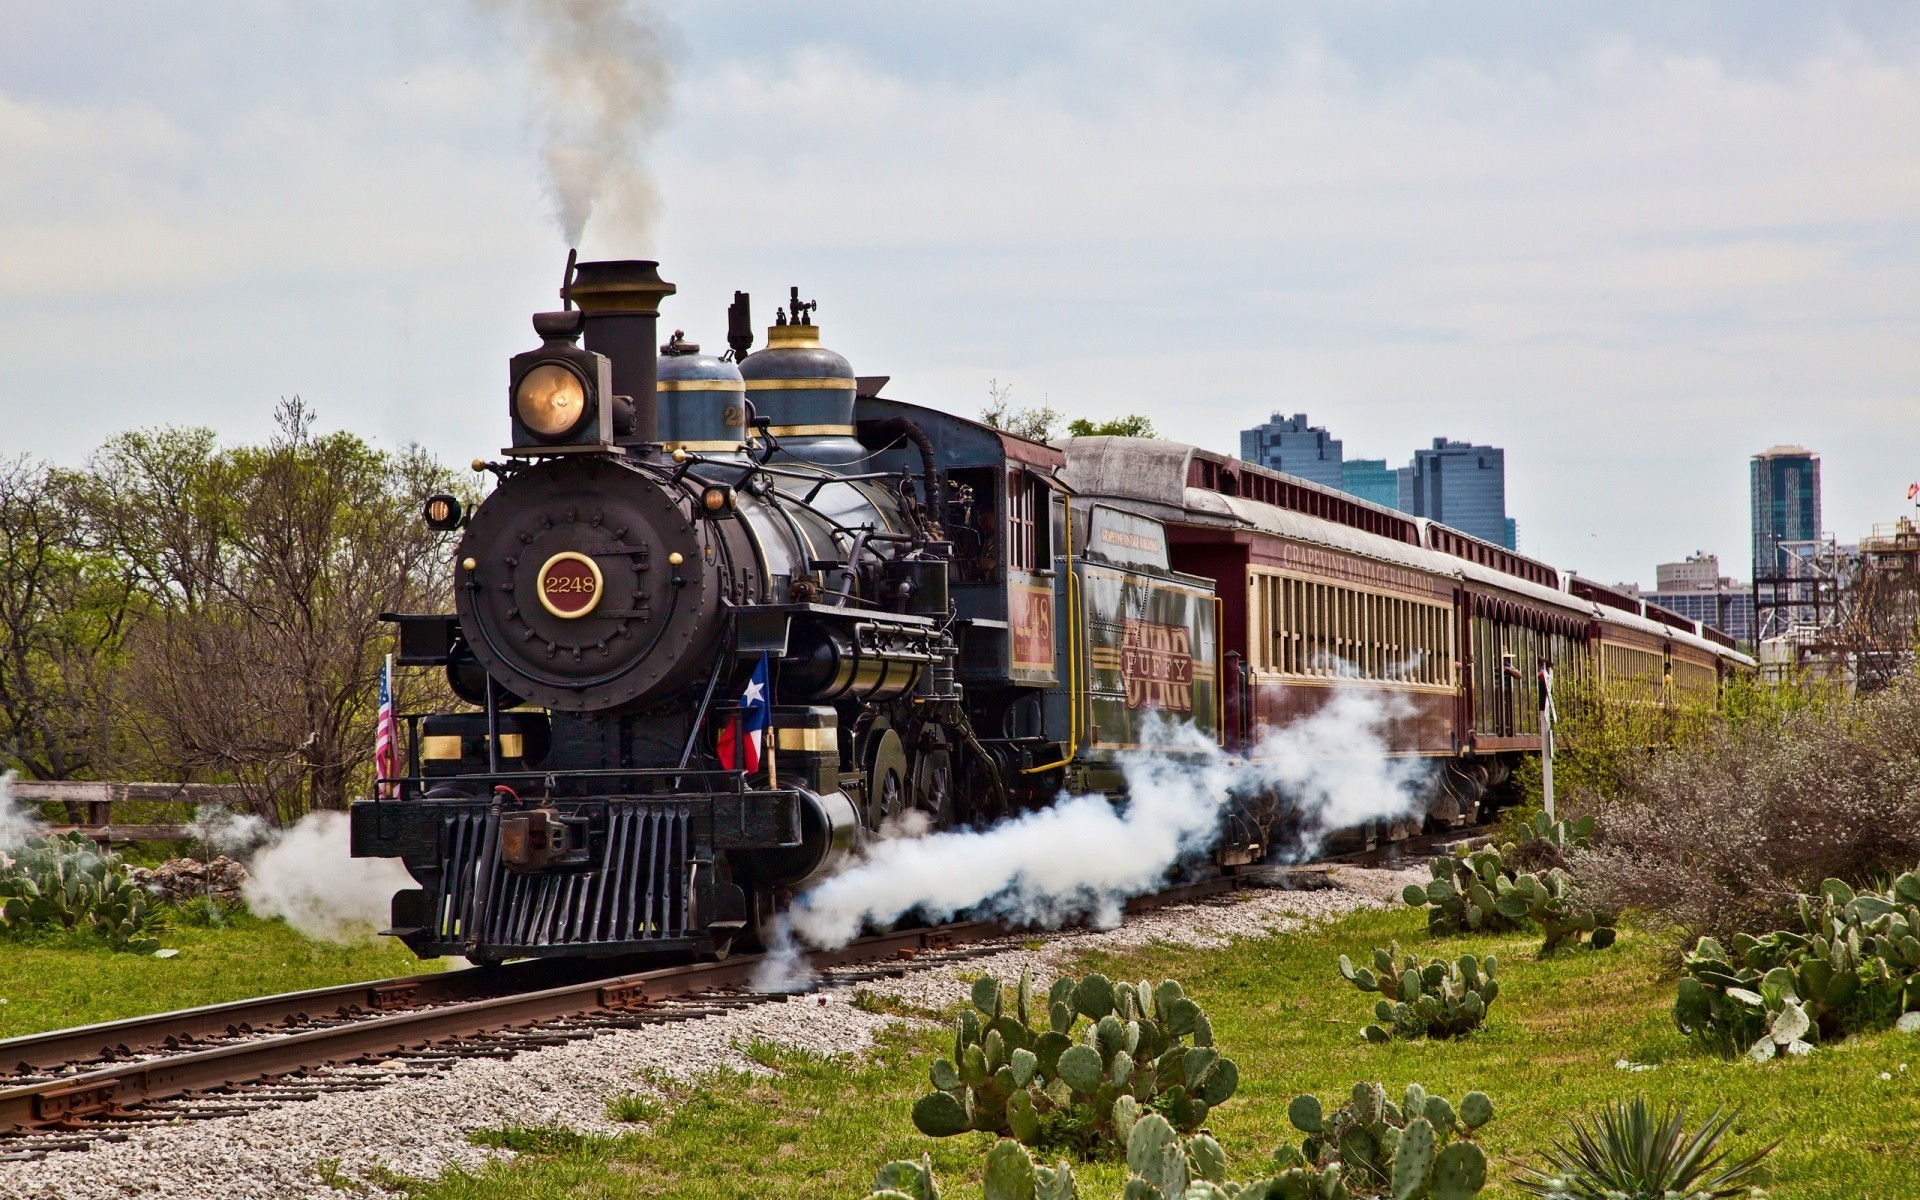 trains train railway steam engine transportation system track smoke vehicle travel coal daylight outdoors industry